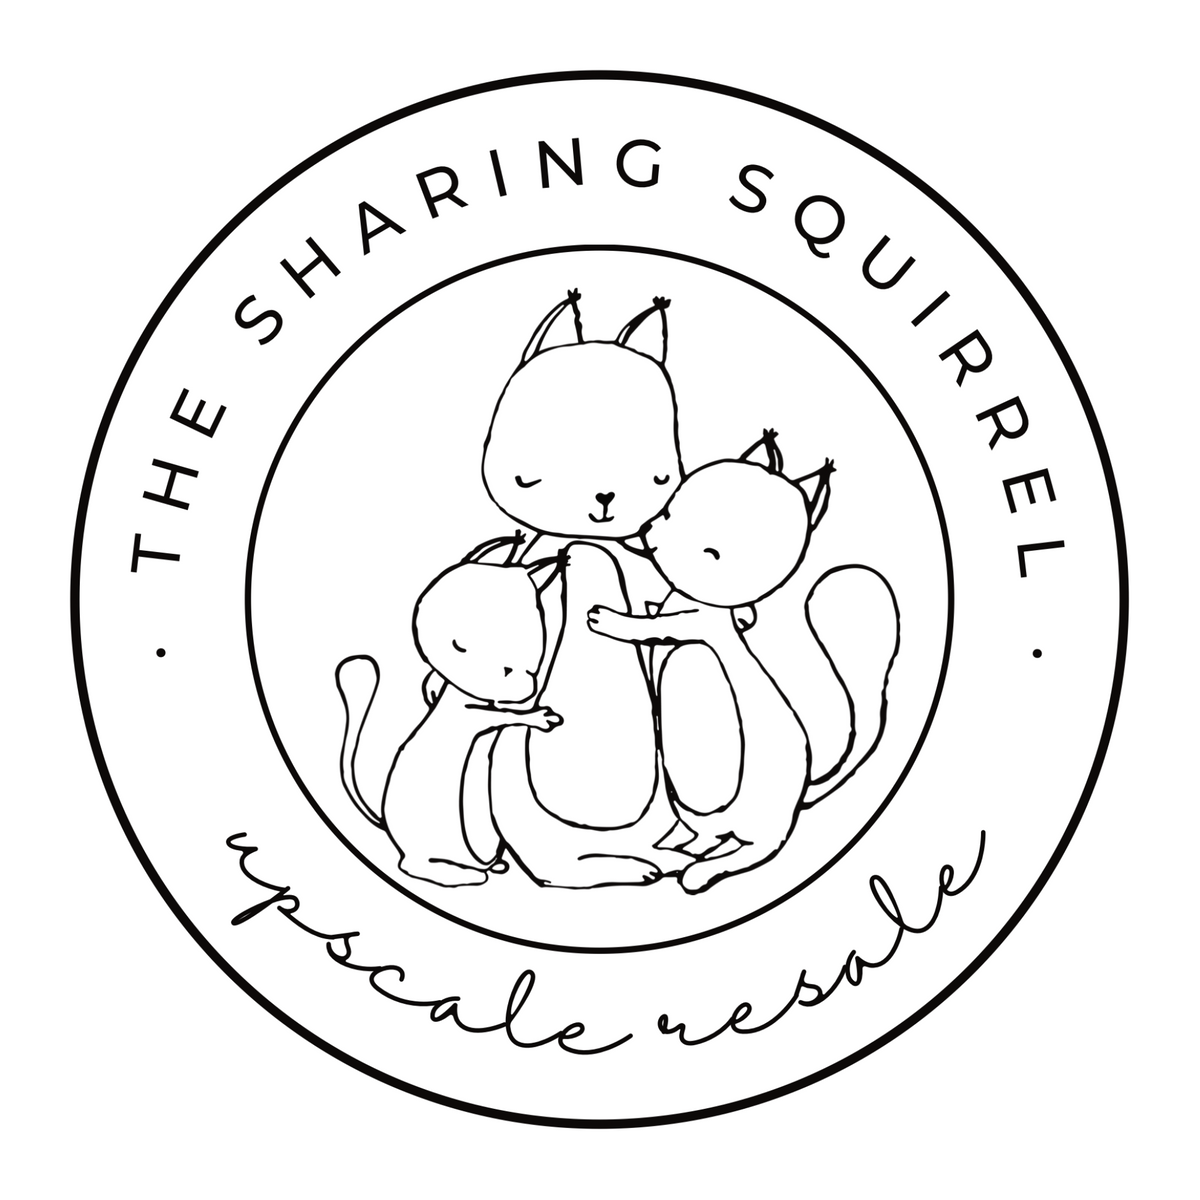 George LEGGINGS – The Sharing Squirrel